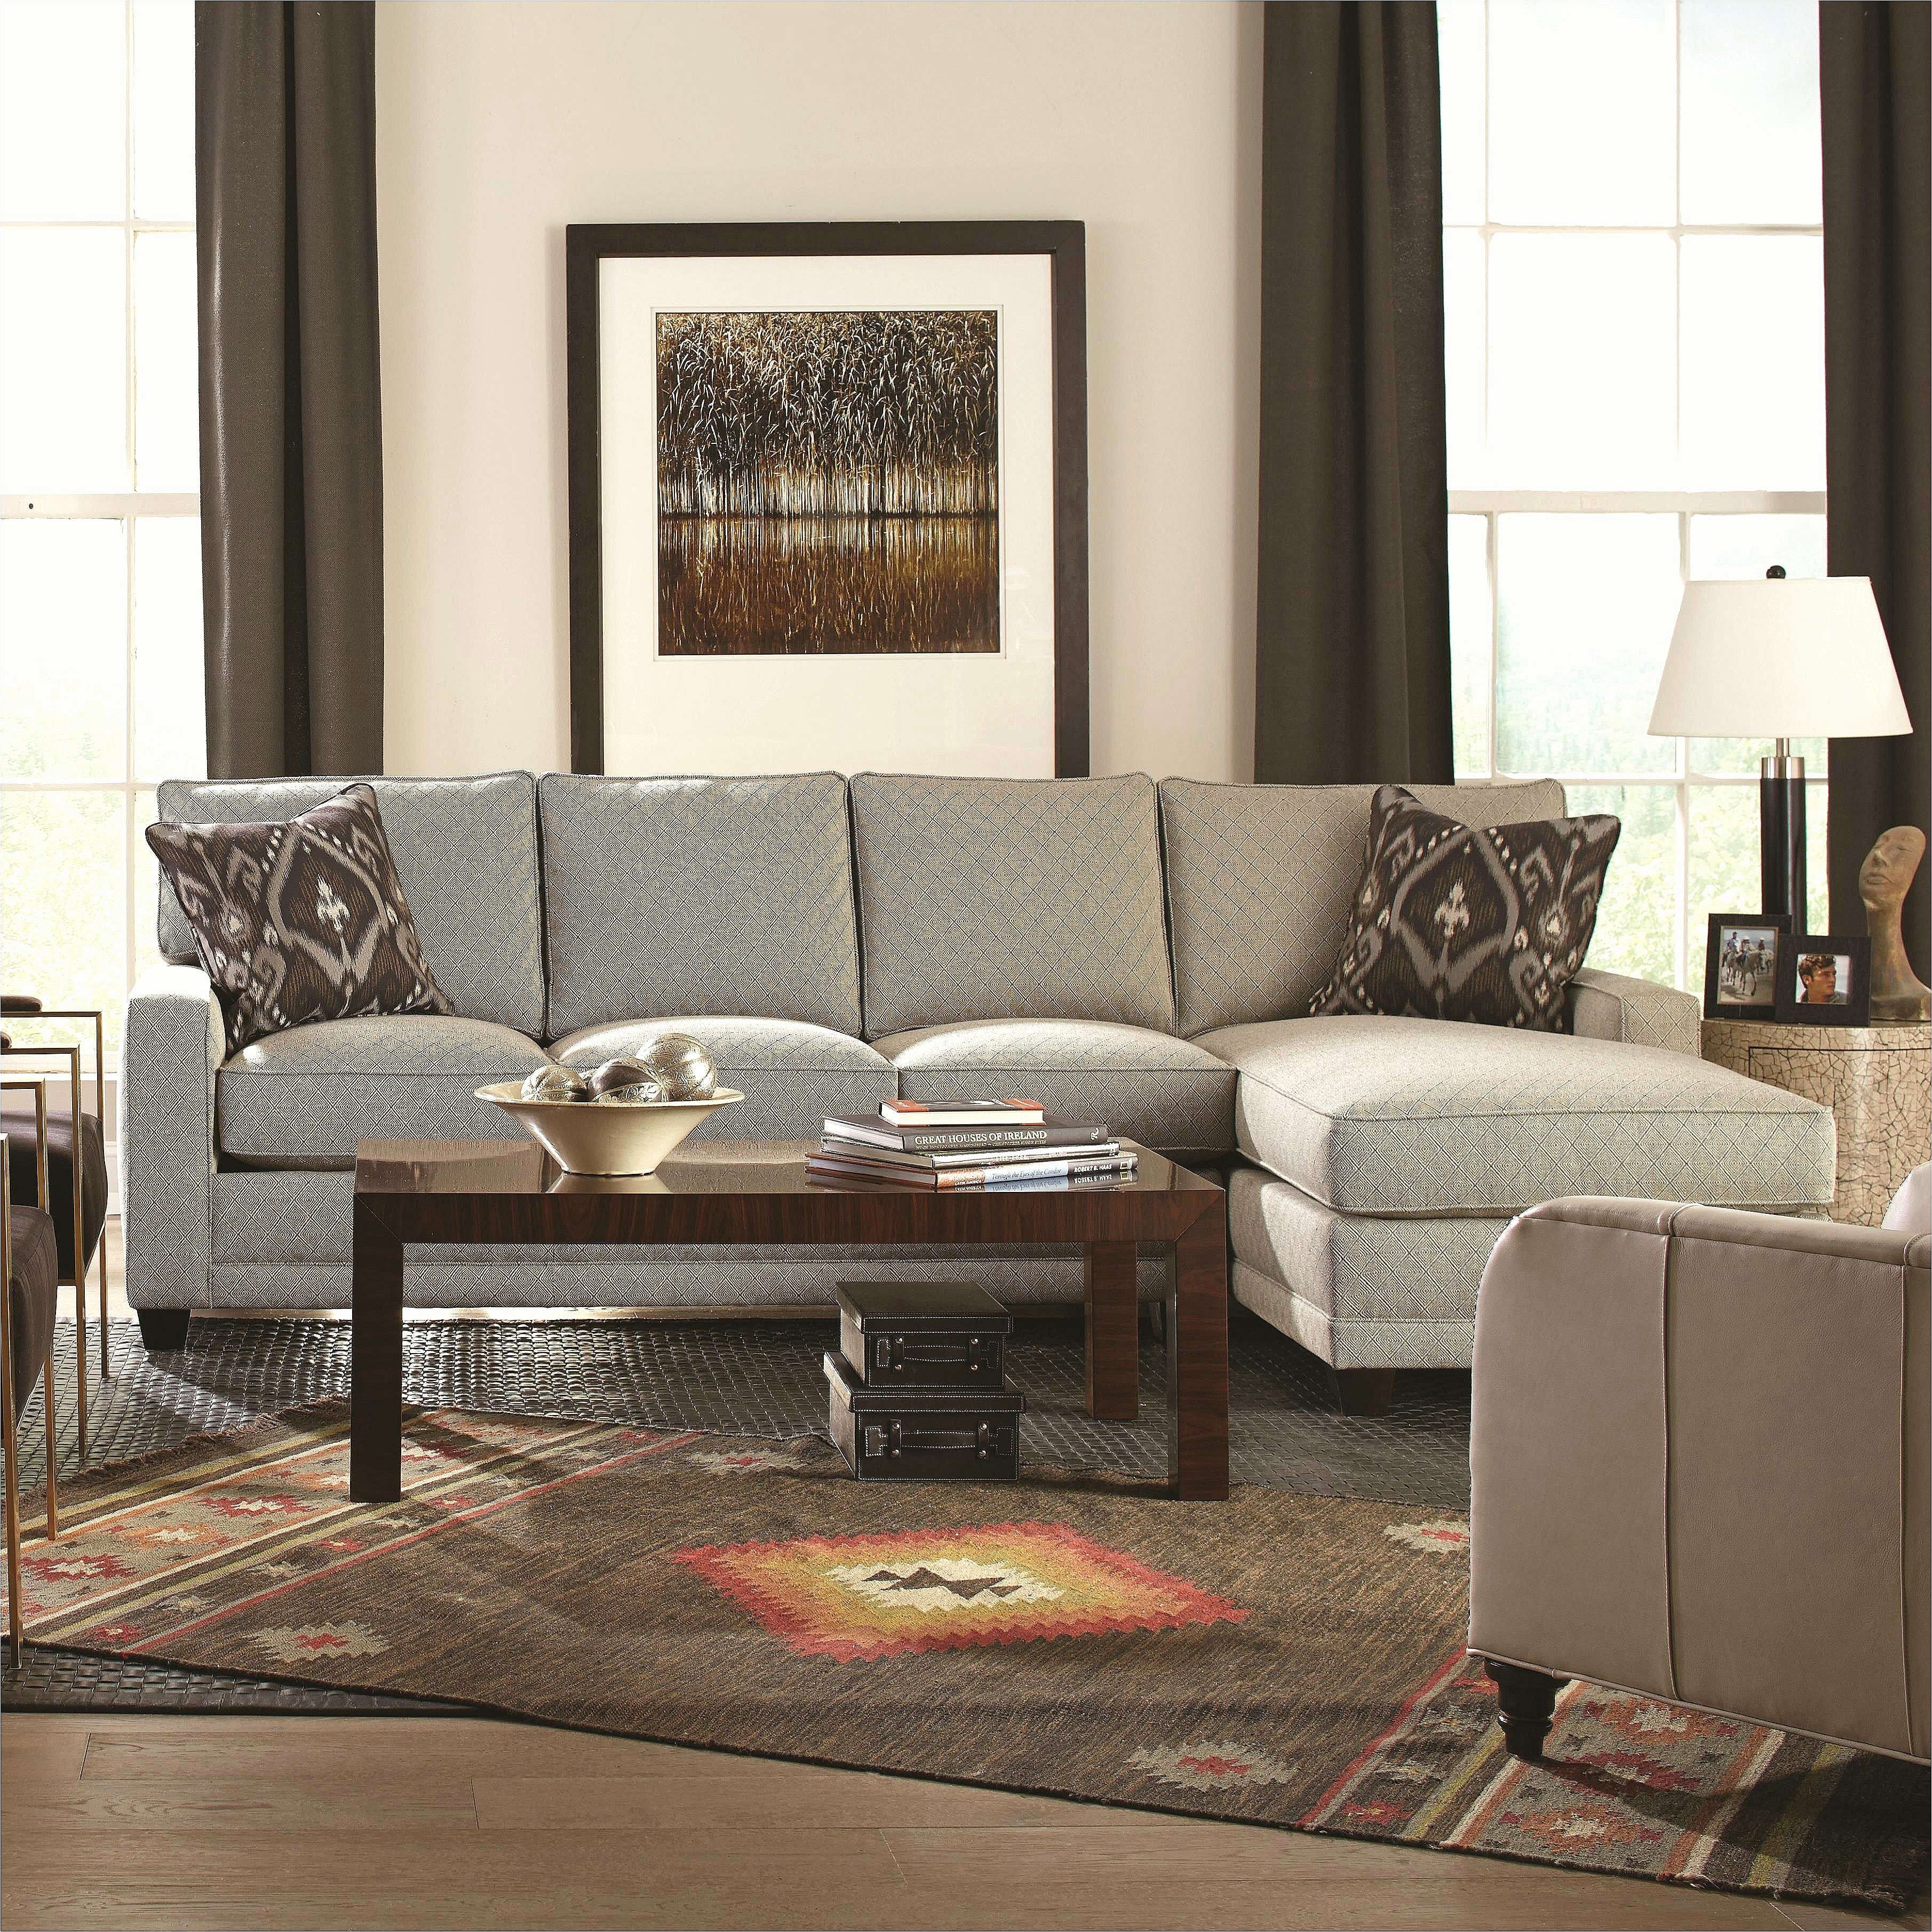 furniture modern modern living room furniture new gunstige sofa macys furniture